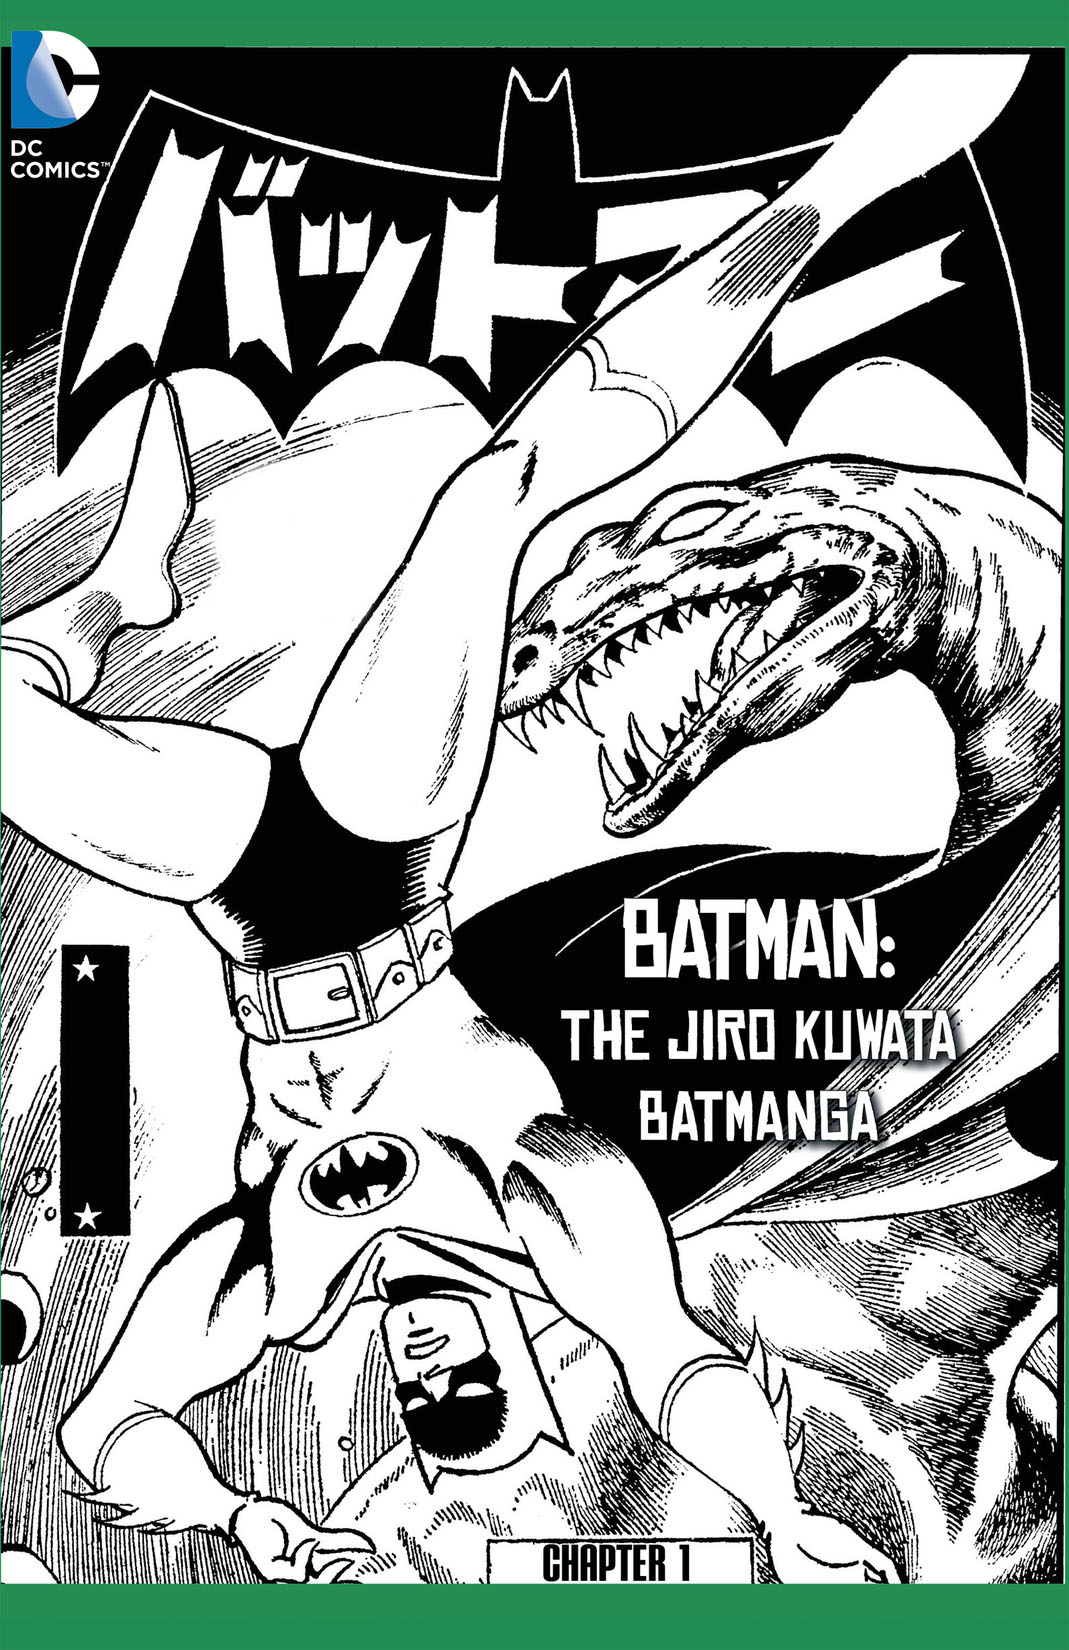 Batman: The Jiro Kuwata Batmanga #35 preview images